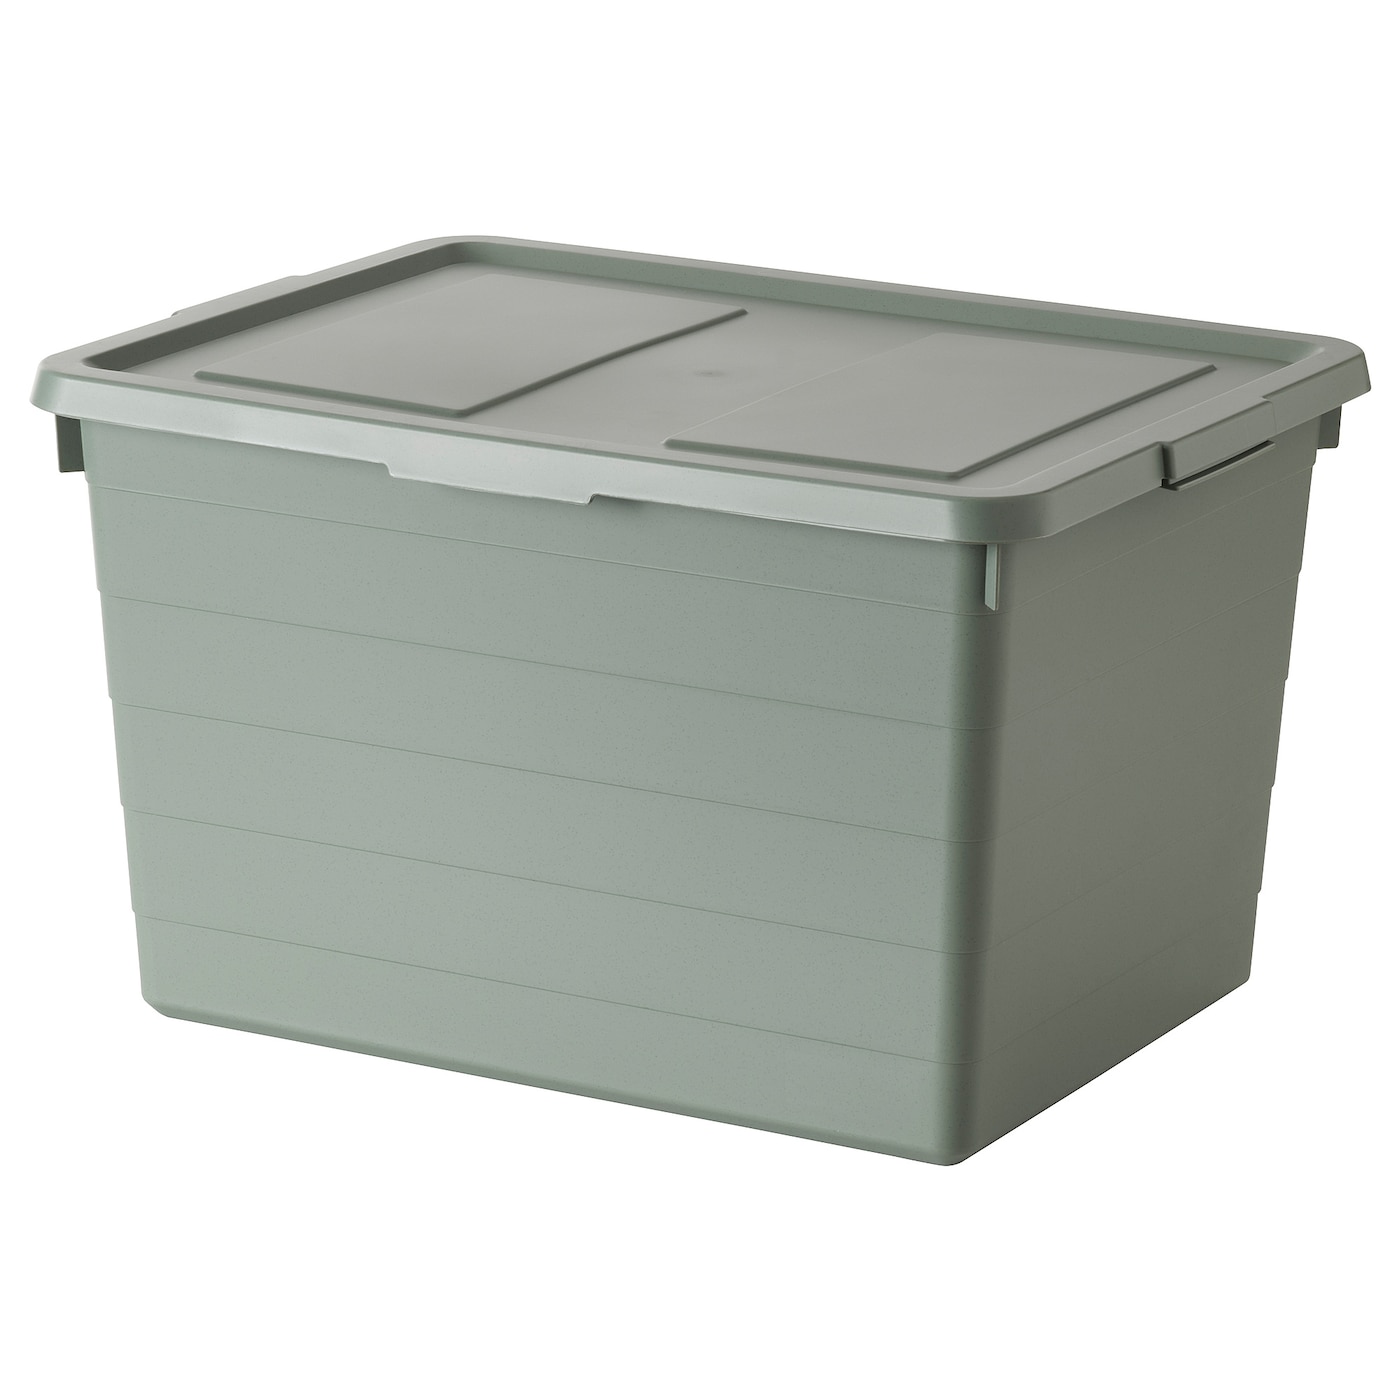 SOCKERBIT storage box with lid grey-green - IKEA